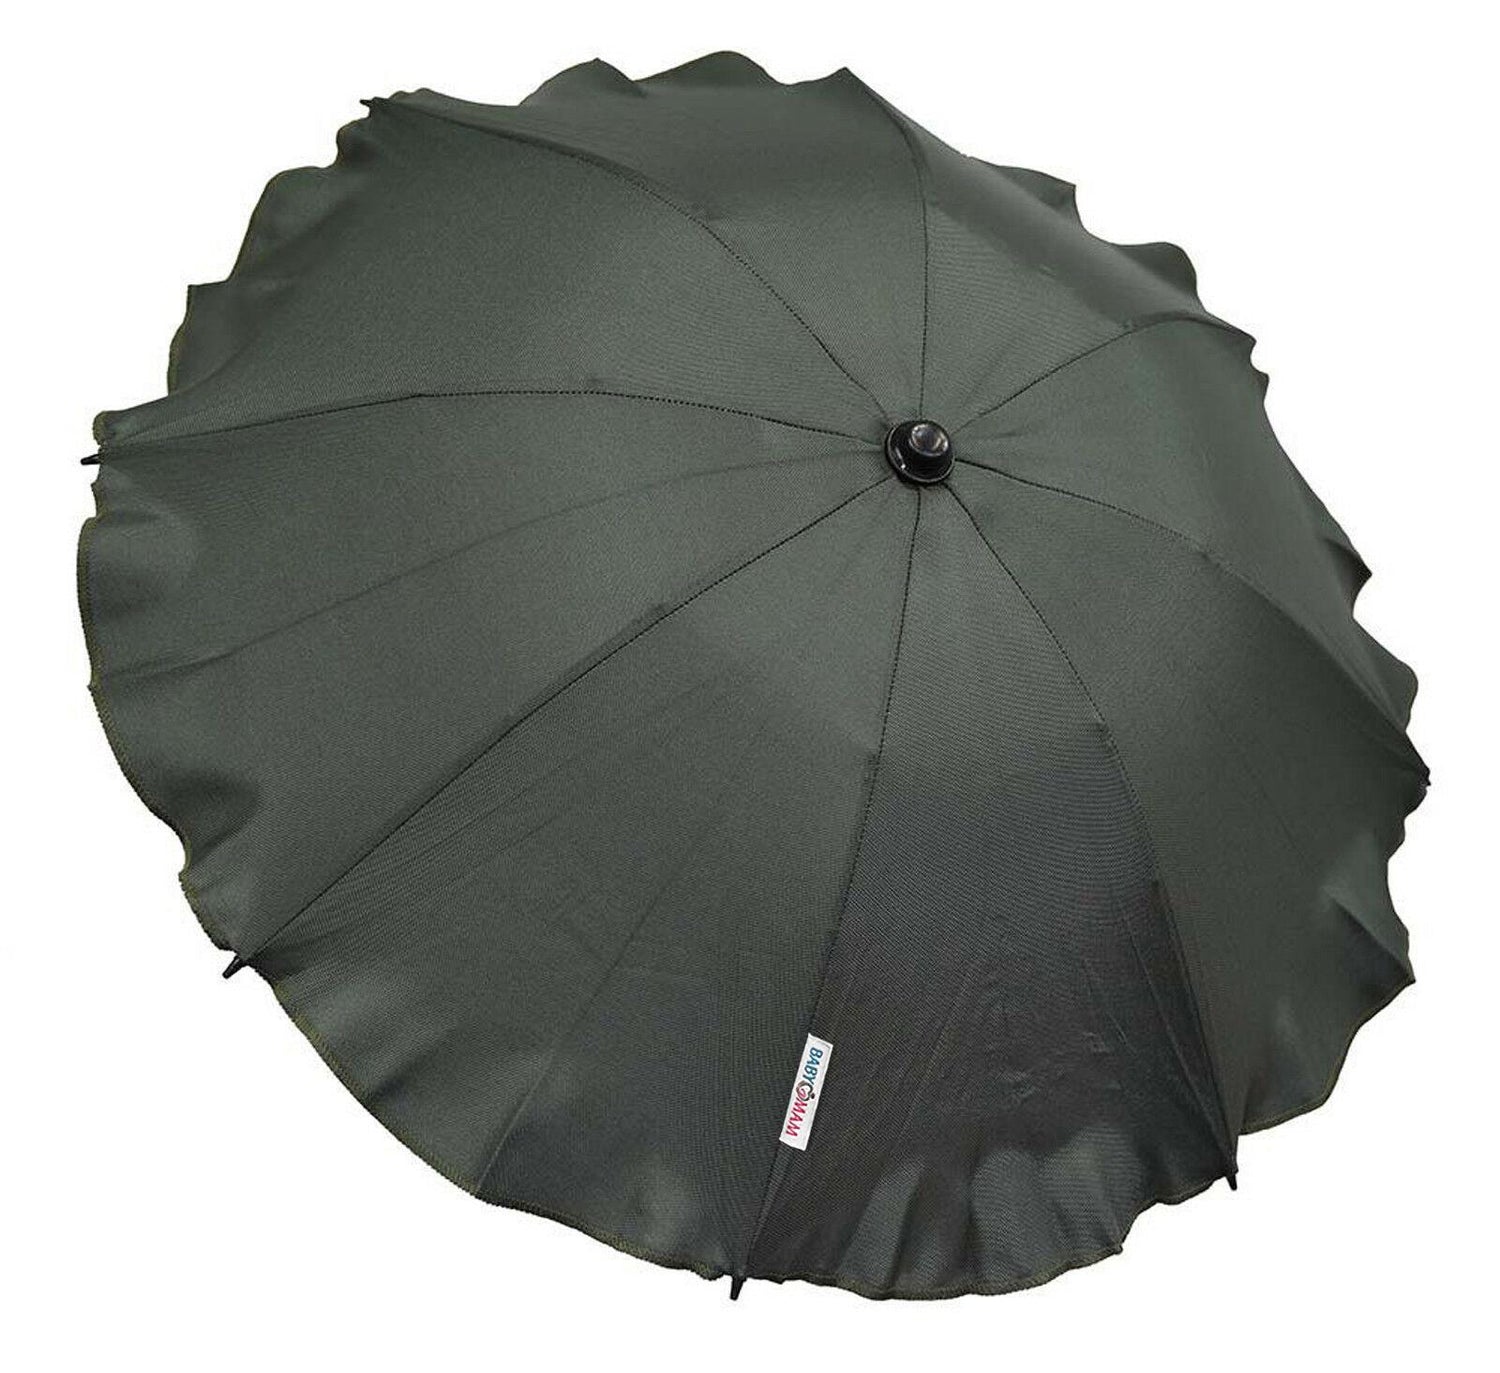 Baby Parasol Universal Sun Umbrella Pram Stroller Canopy Protect From Sun Rain Khaki Green